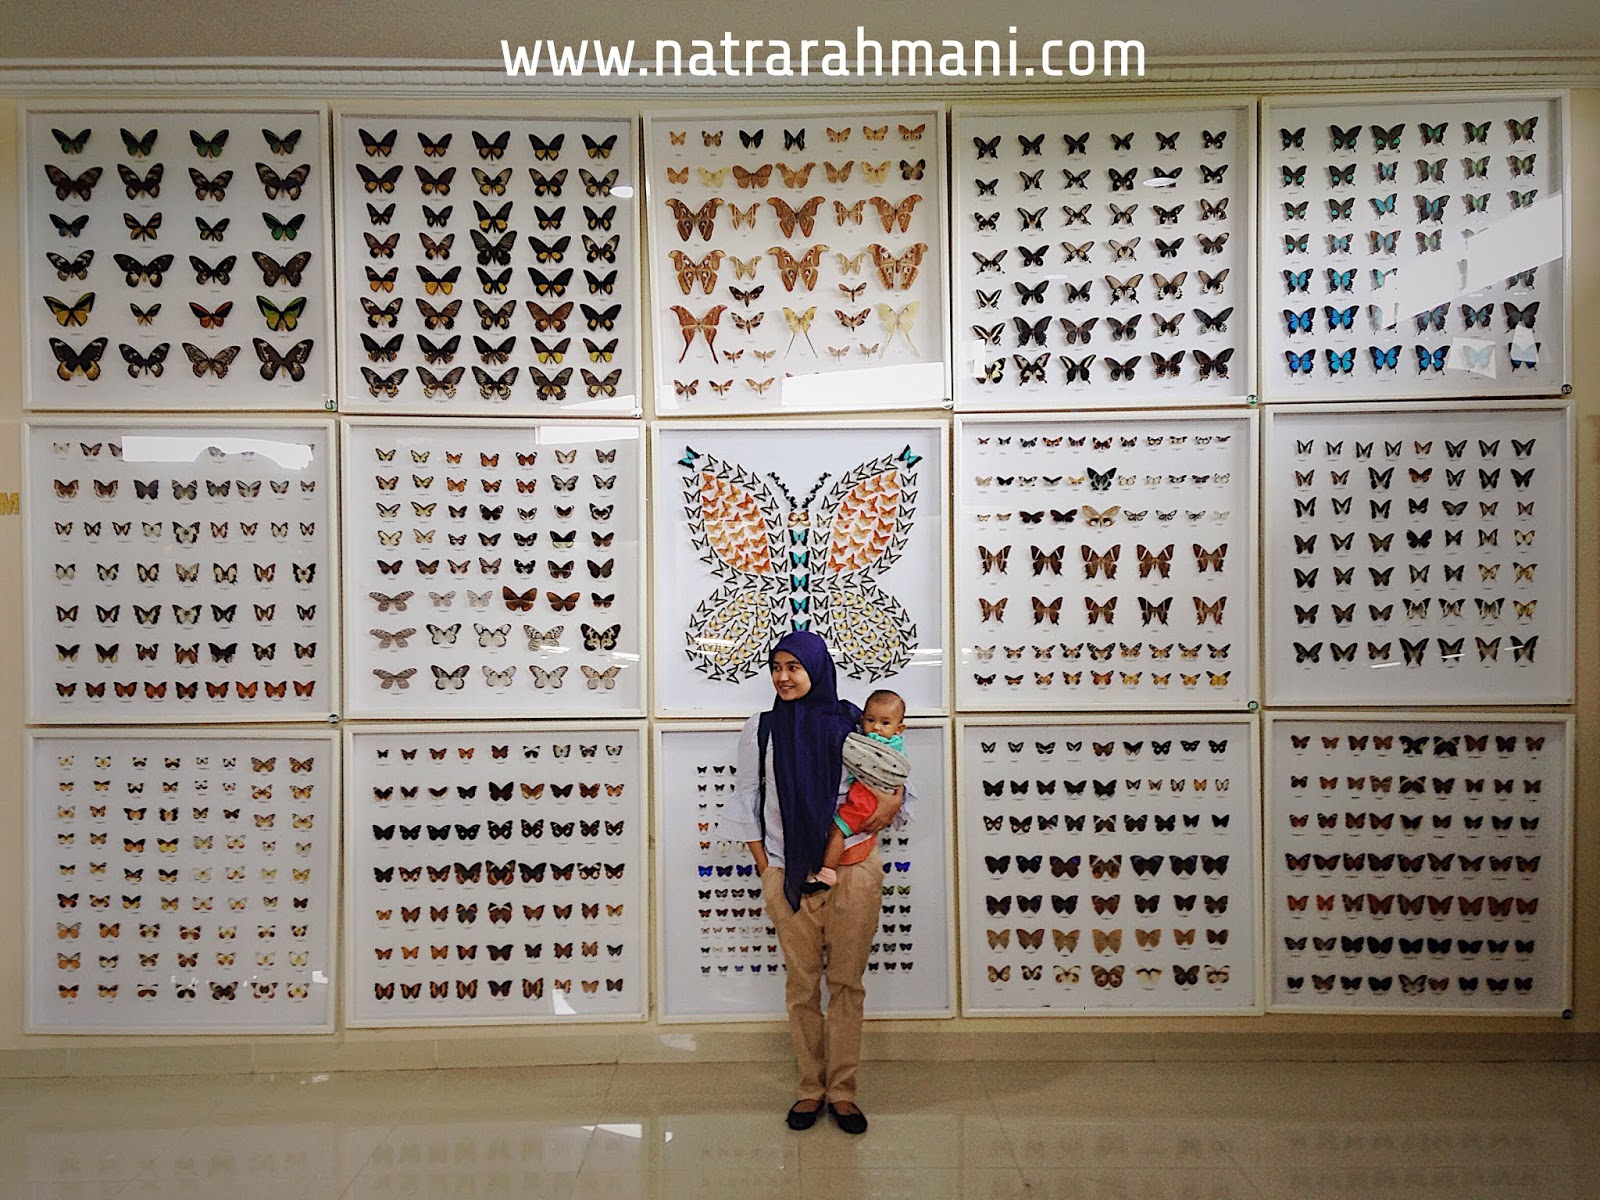 rahmat-international-wildlife-museum-gallery